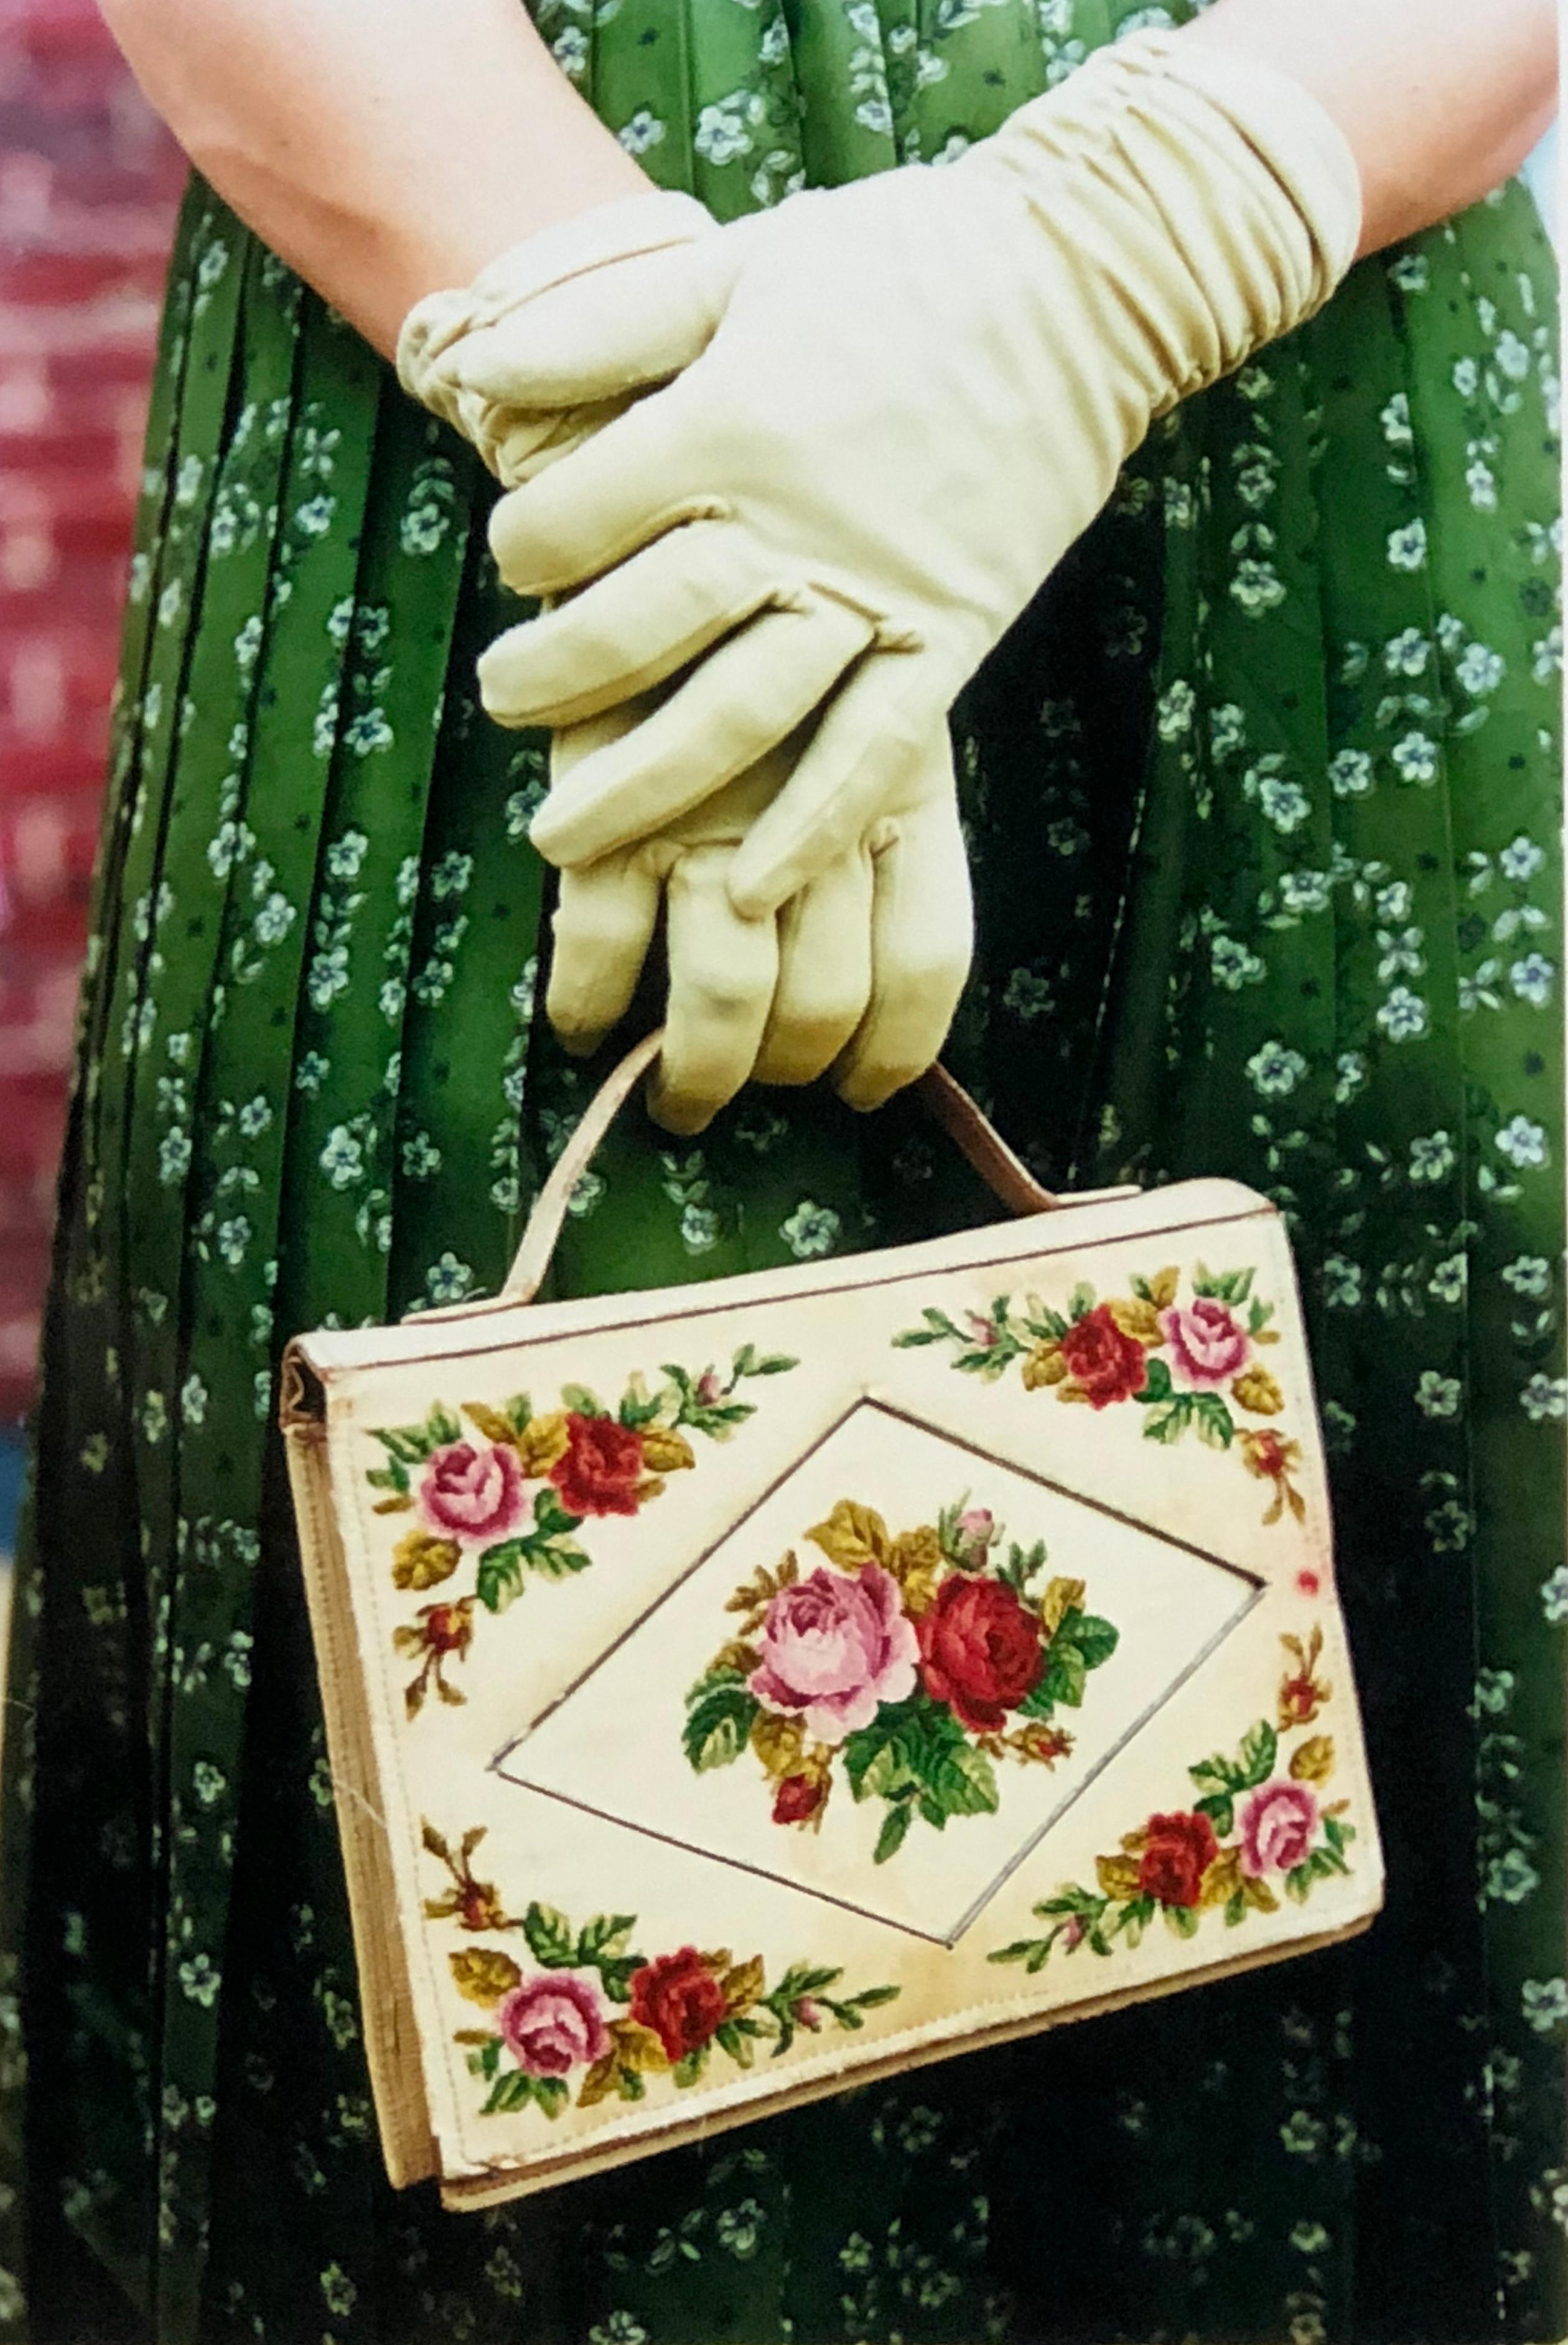 Richard Heeps Color Photograph – Handschuhe und Handtasche, Goodwood, Chichester - Feminine Mode, Farbfotografie